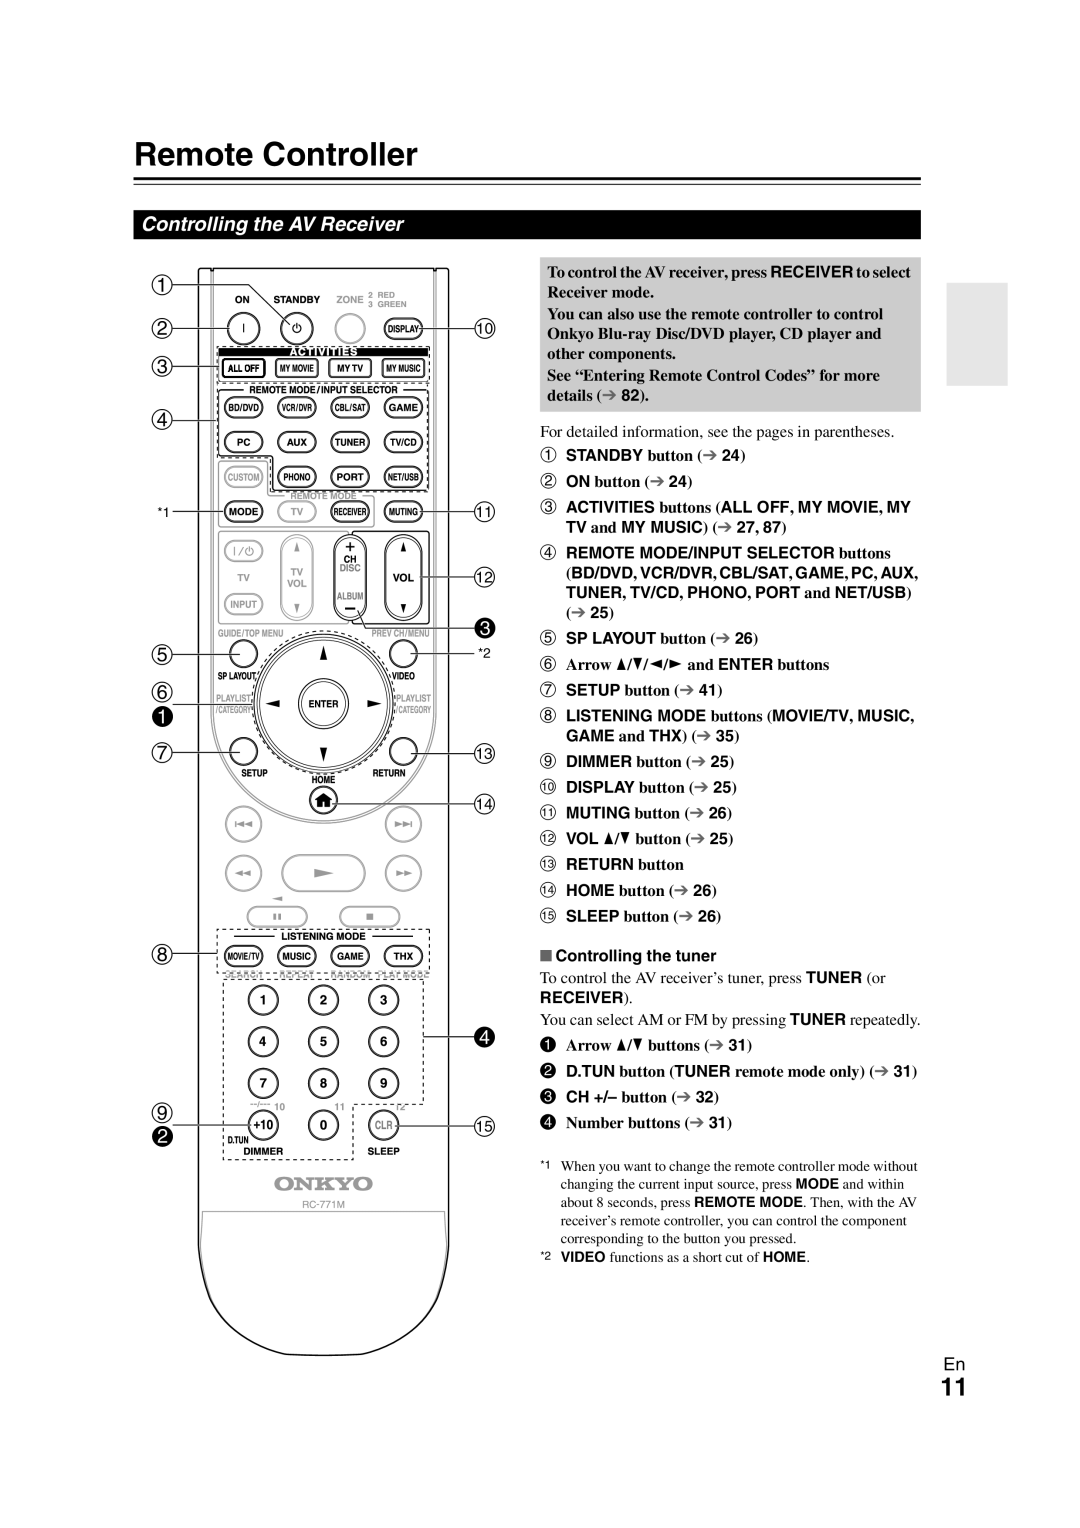 Onkyo TX-NR808 Remote Controller, a bj c d, f a gm n, h d i bo, Controlling the AV Receiver, aSTANDBY button 